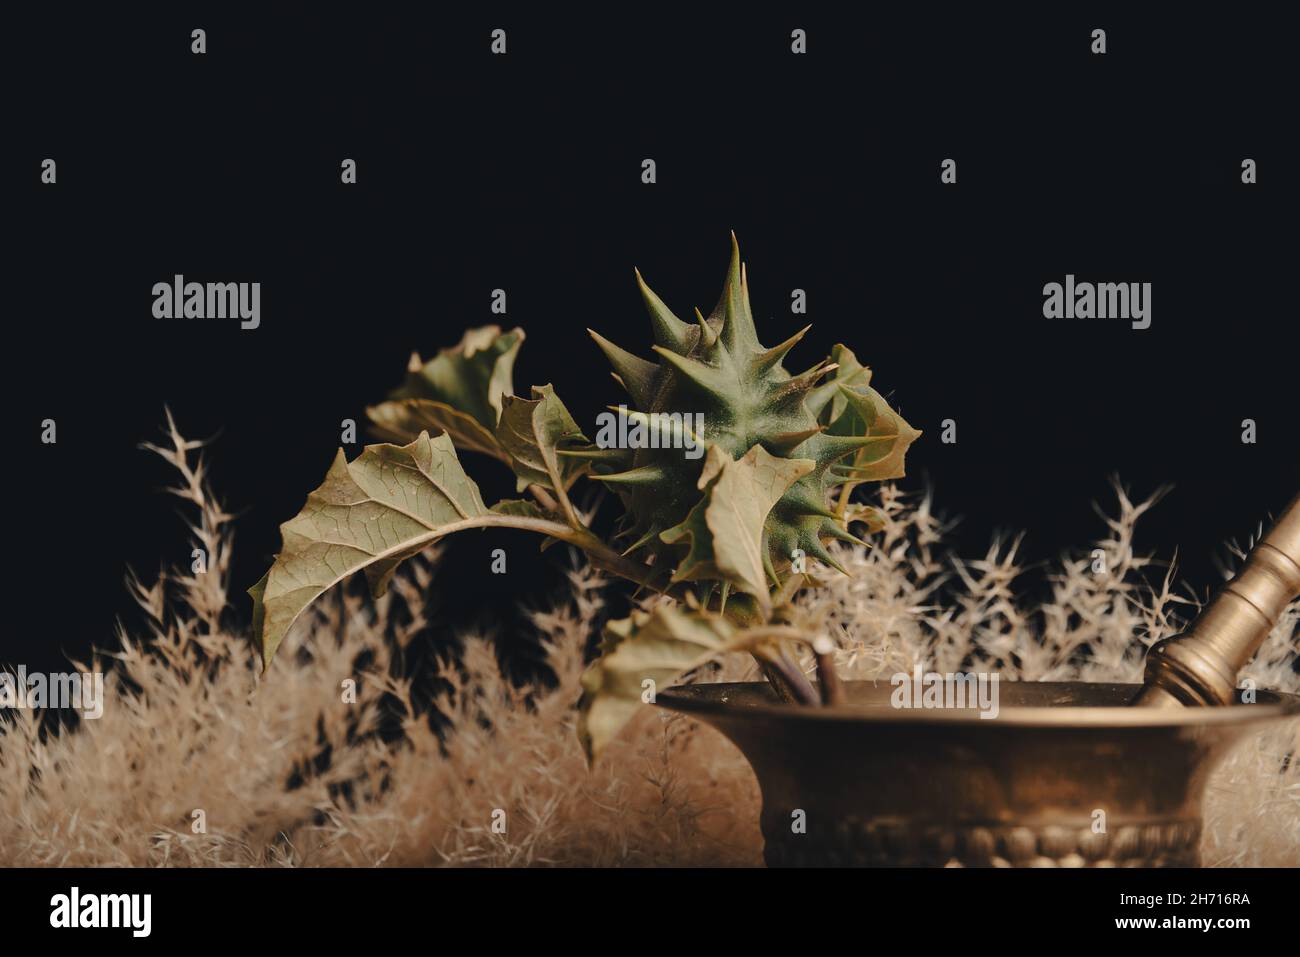 Stramonium plant, also called burundanga. Consciousness-erasing plant. Stock Photo